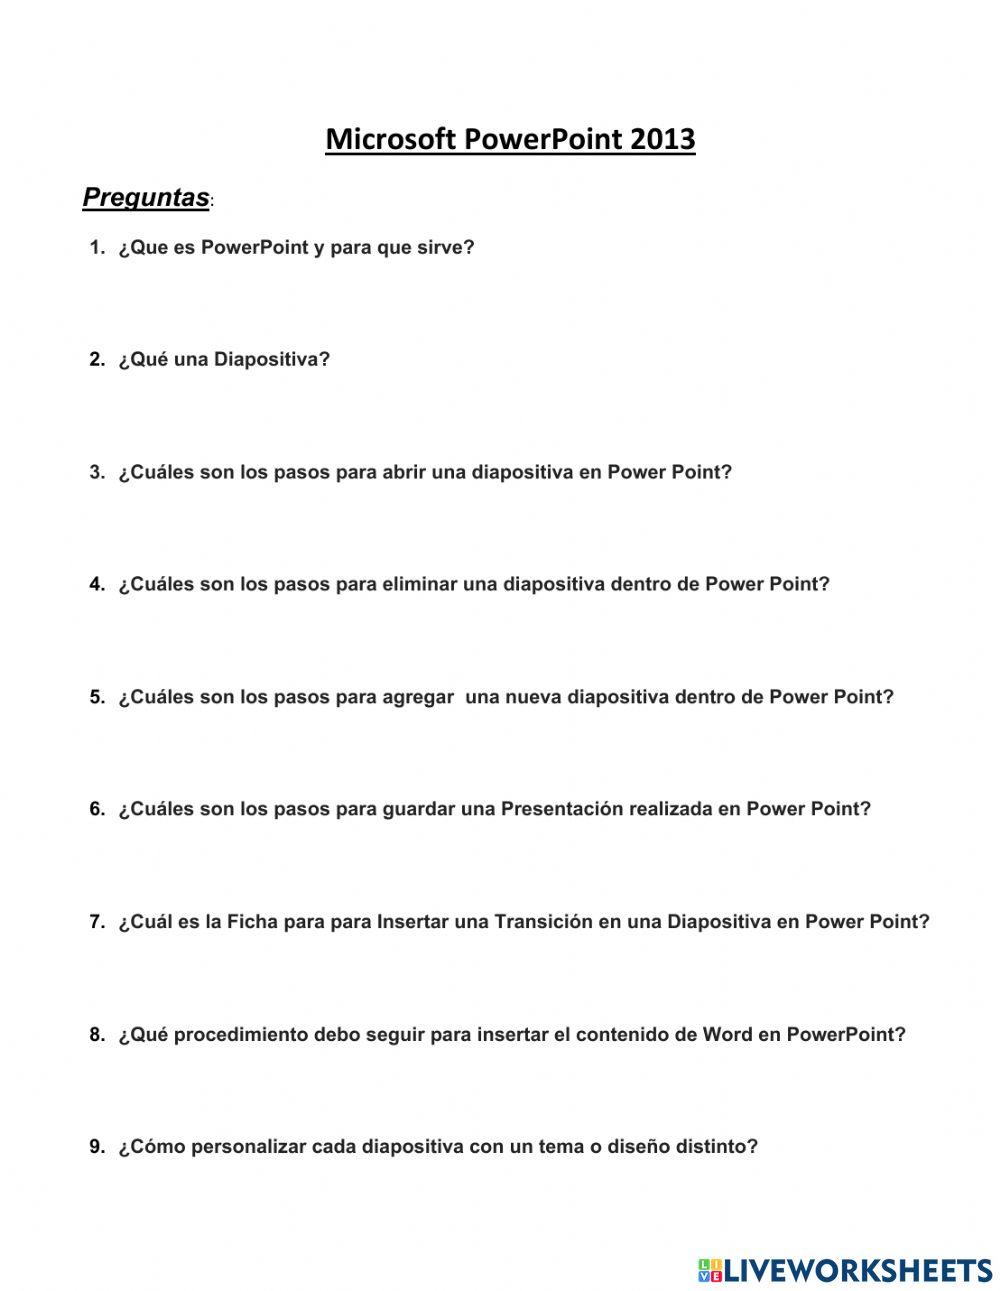 Preguntas de Microsoft PowerPoint 2013